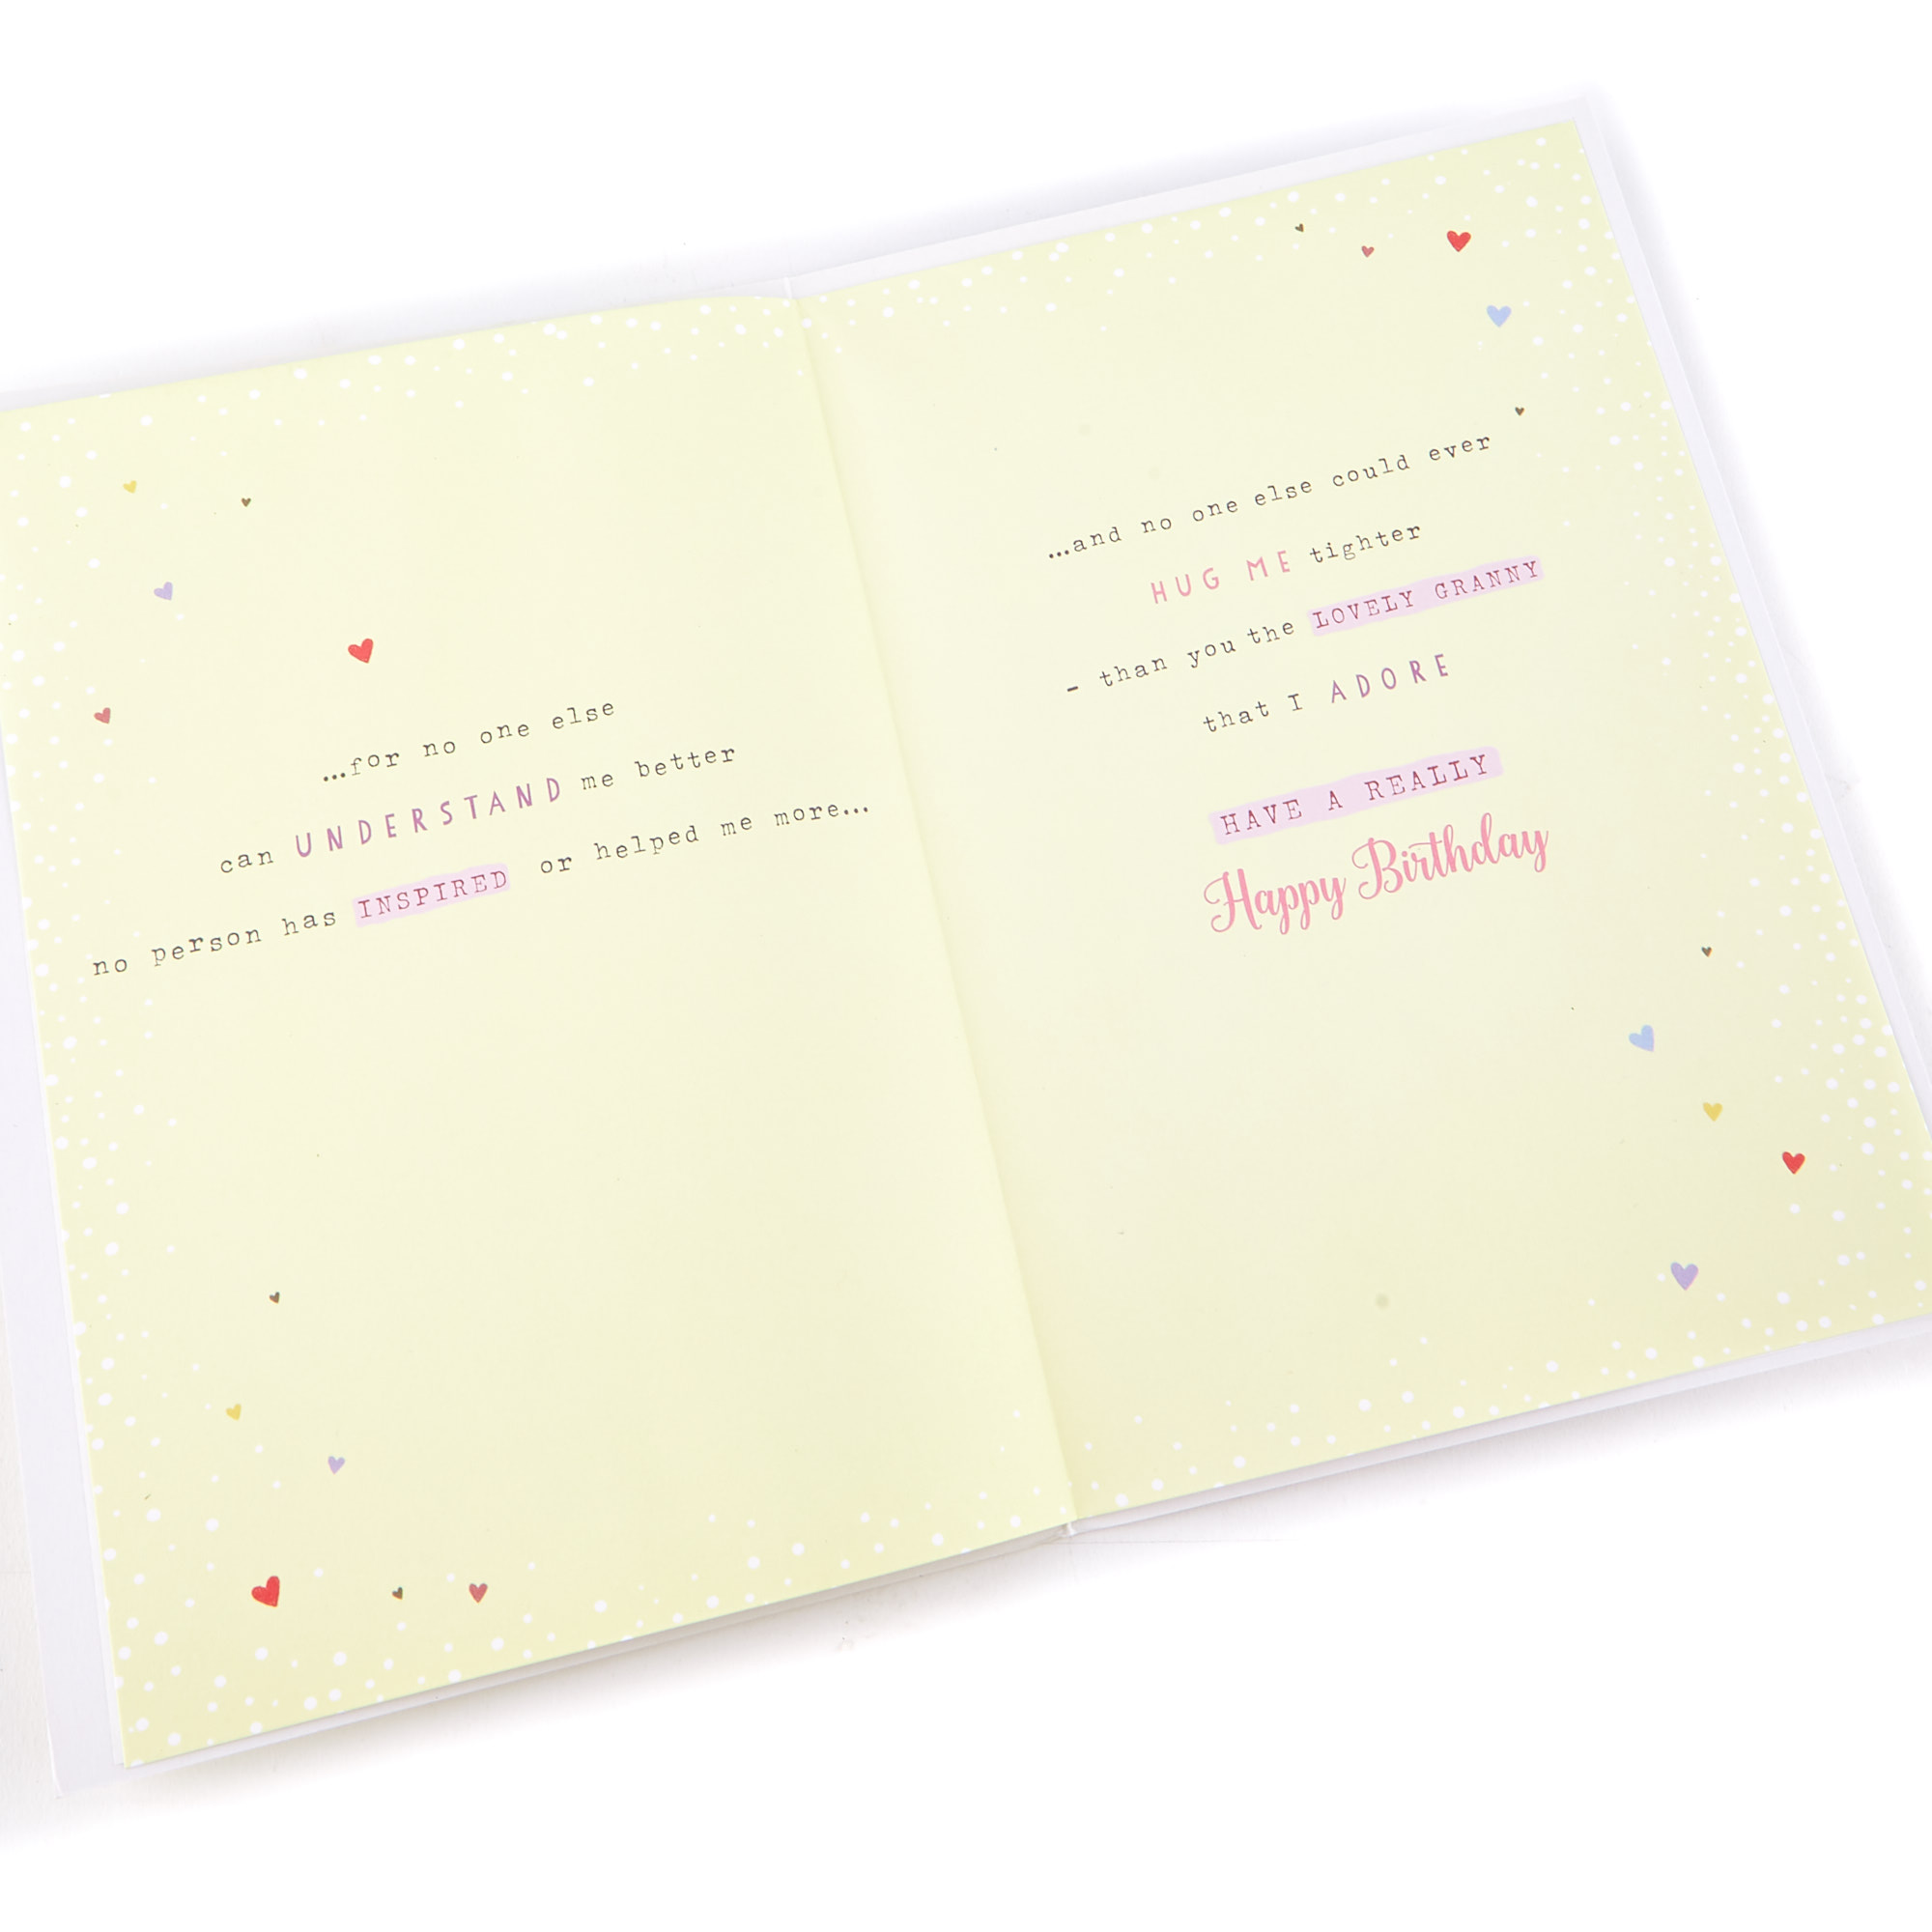 Birthday Card - Lovely Granny, Bear With Flowers 